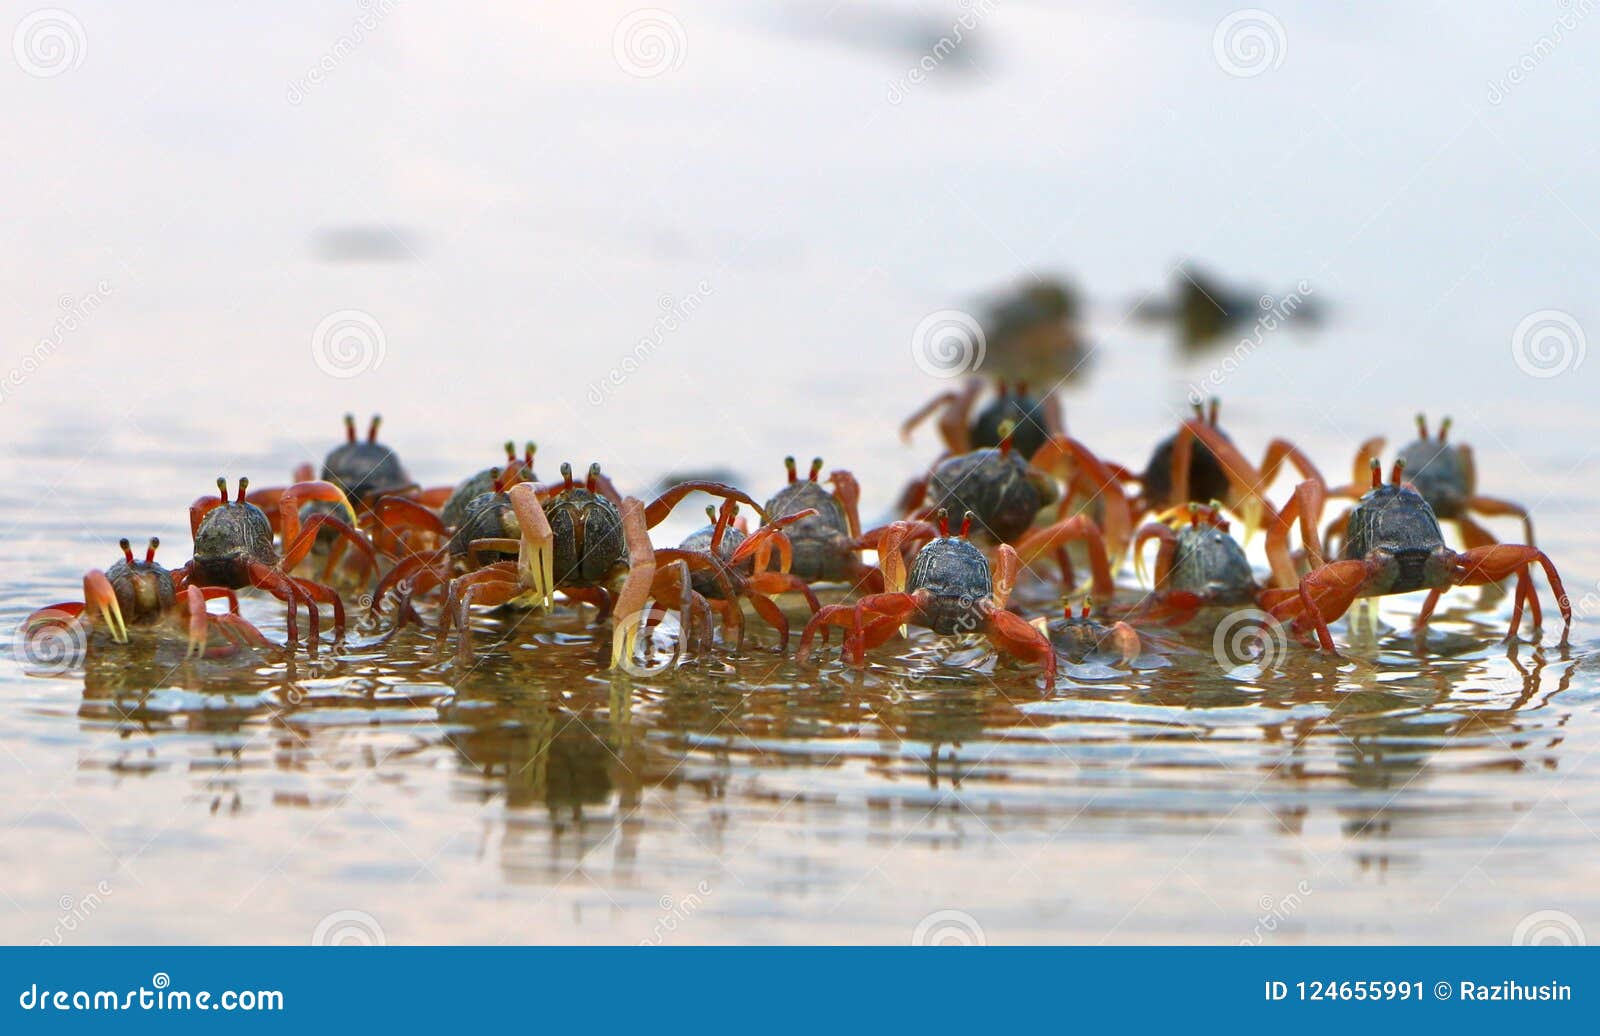 246 Crab Moving Stock Photos - Free & Royalty-Free Stock Photos